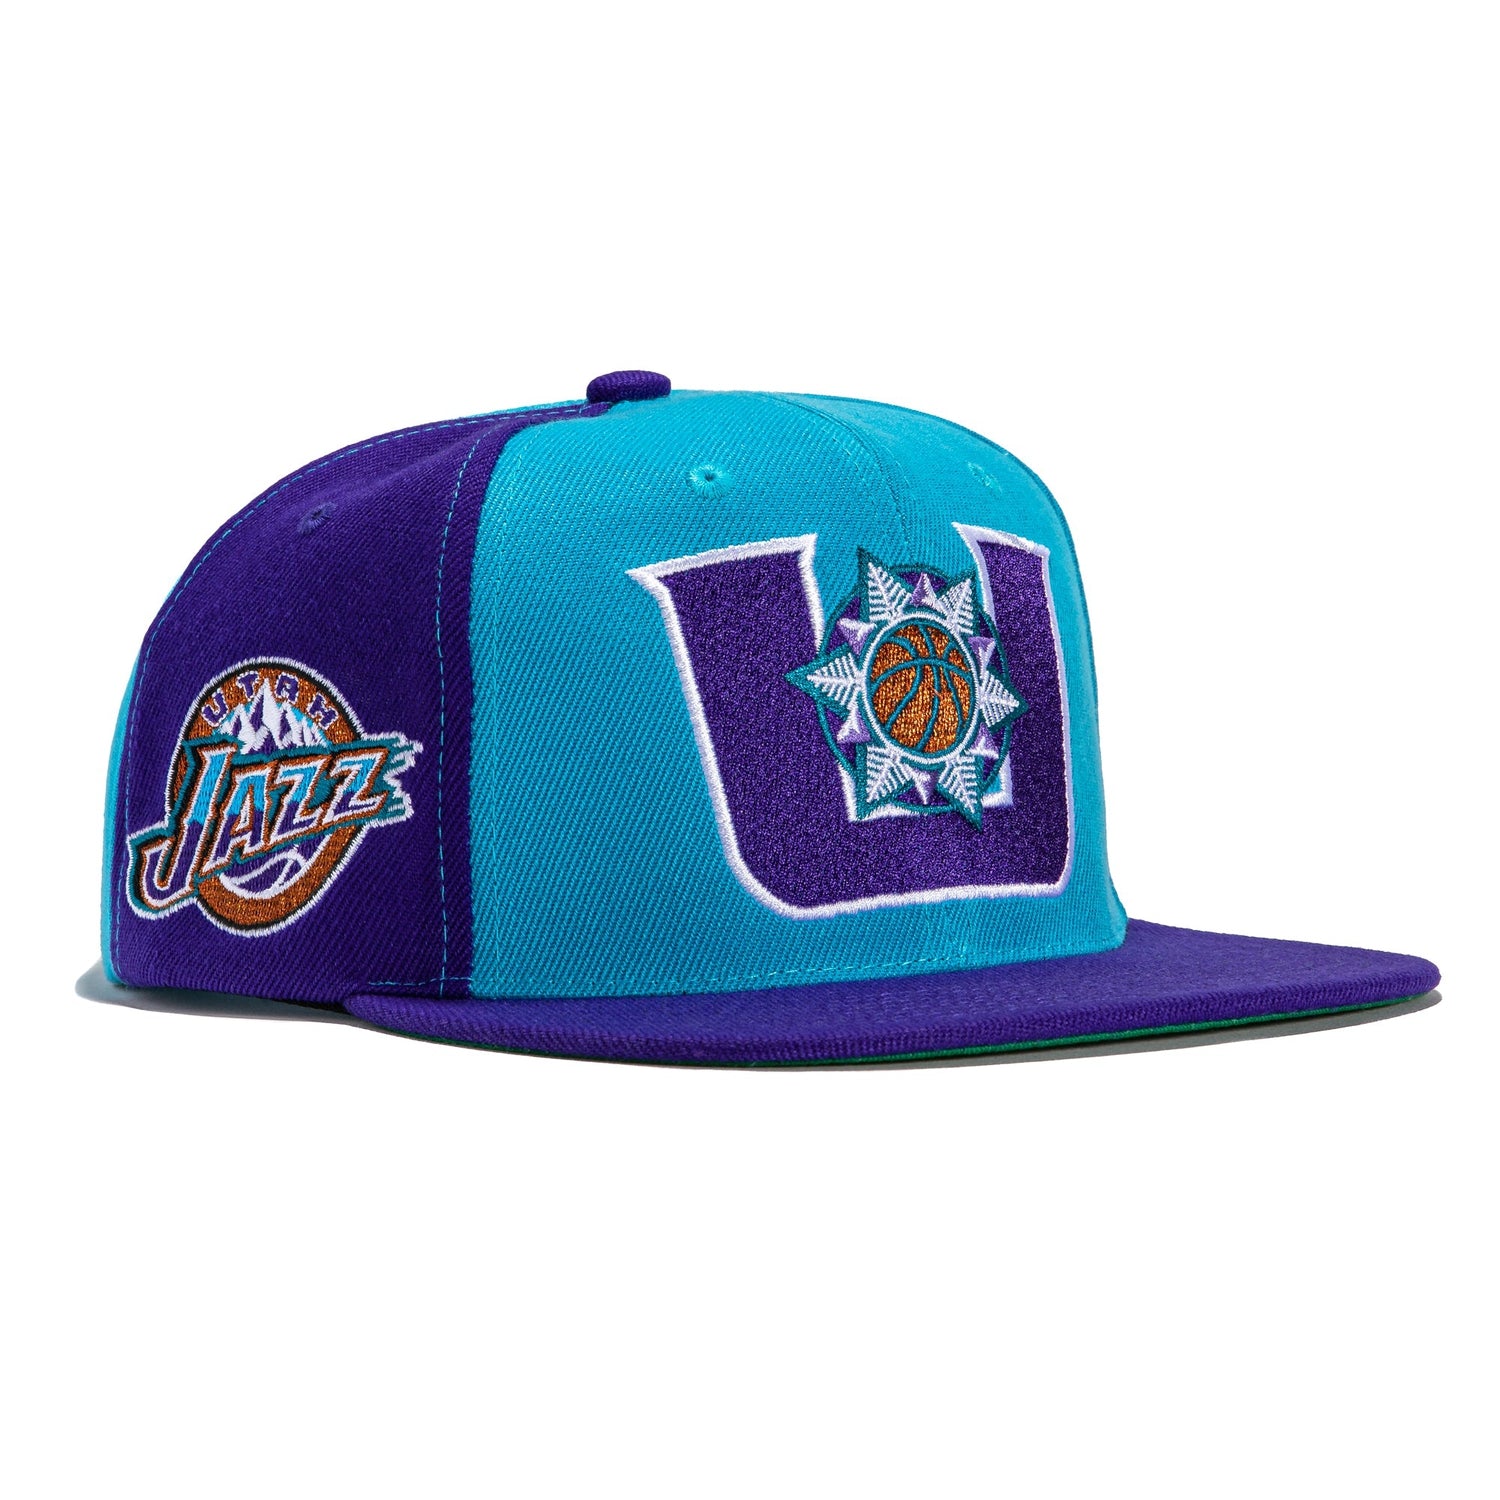 Utah Jazz Hats, Jazz Caps, Beanie, Snapbacks